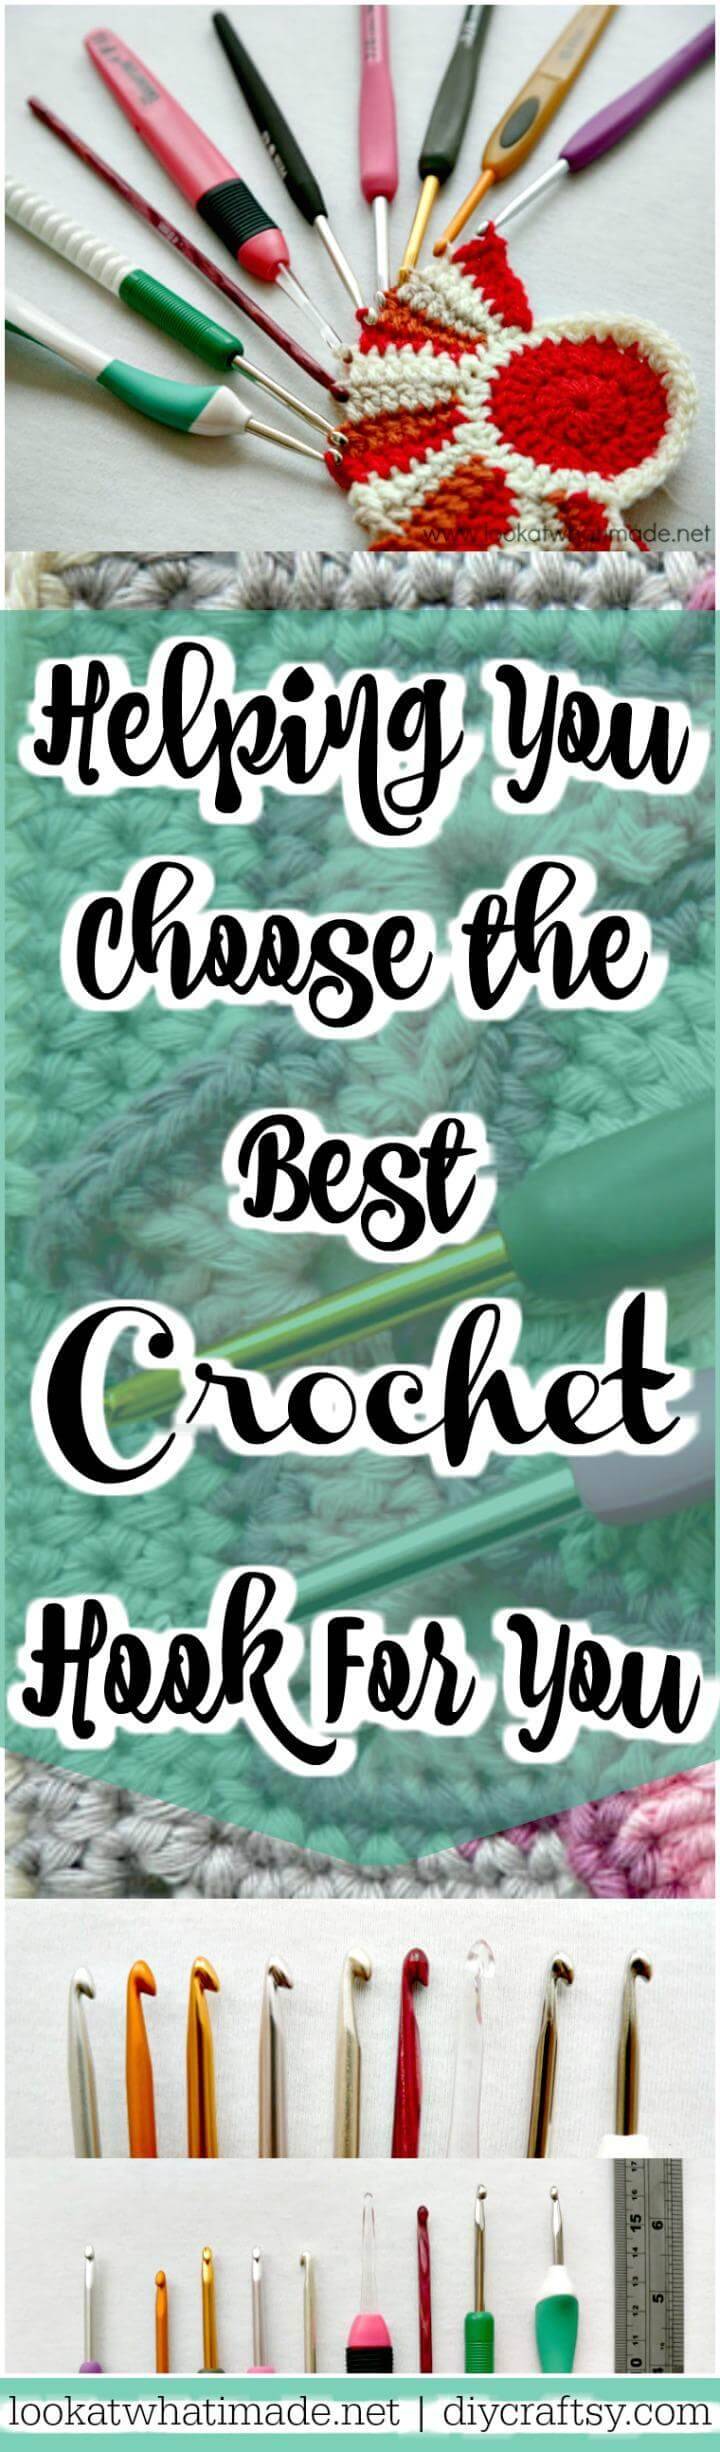 learn how to choose the best crochet hook